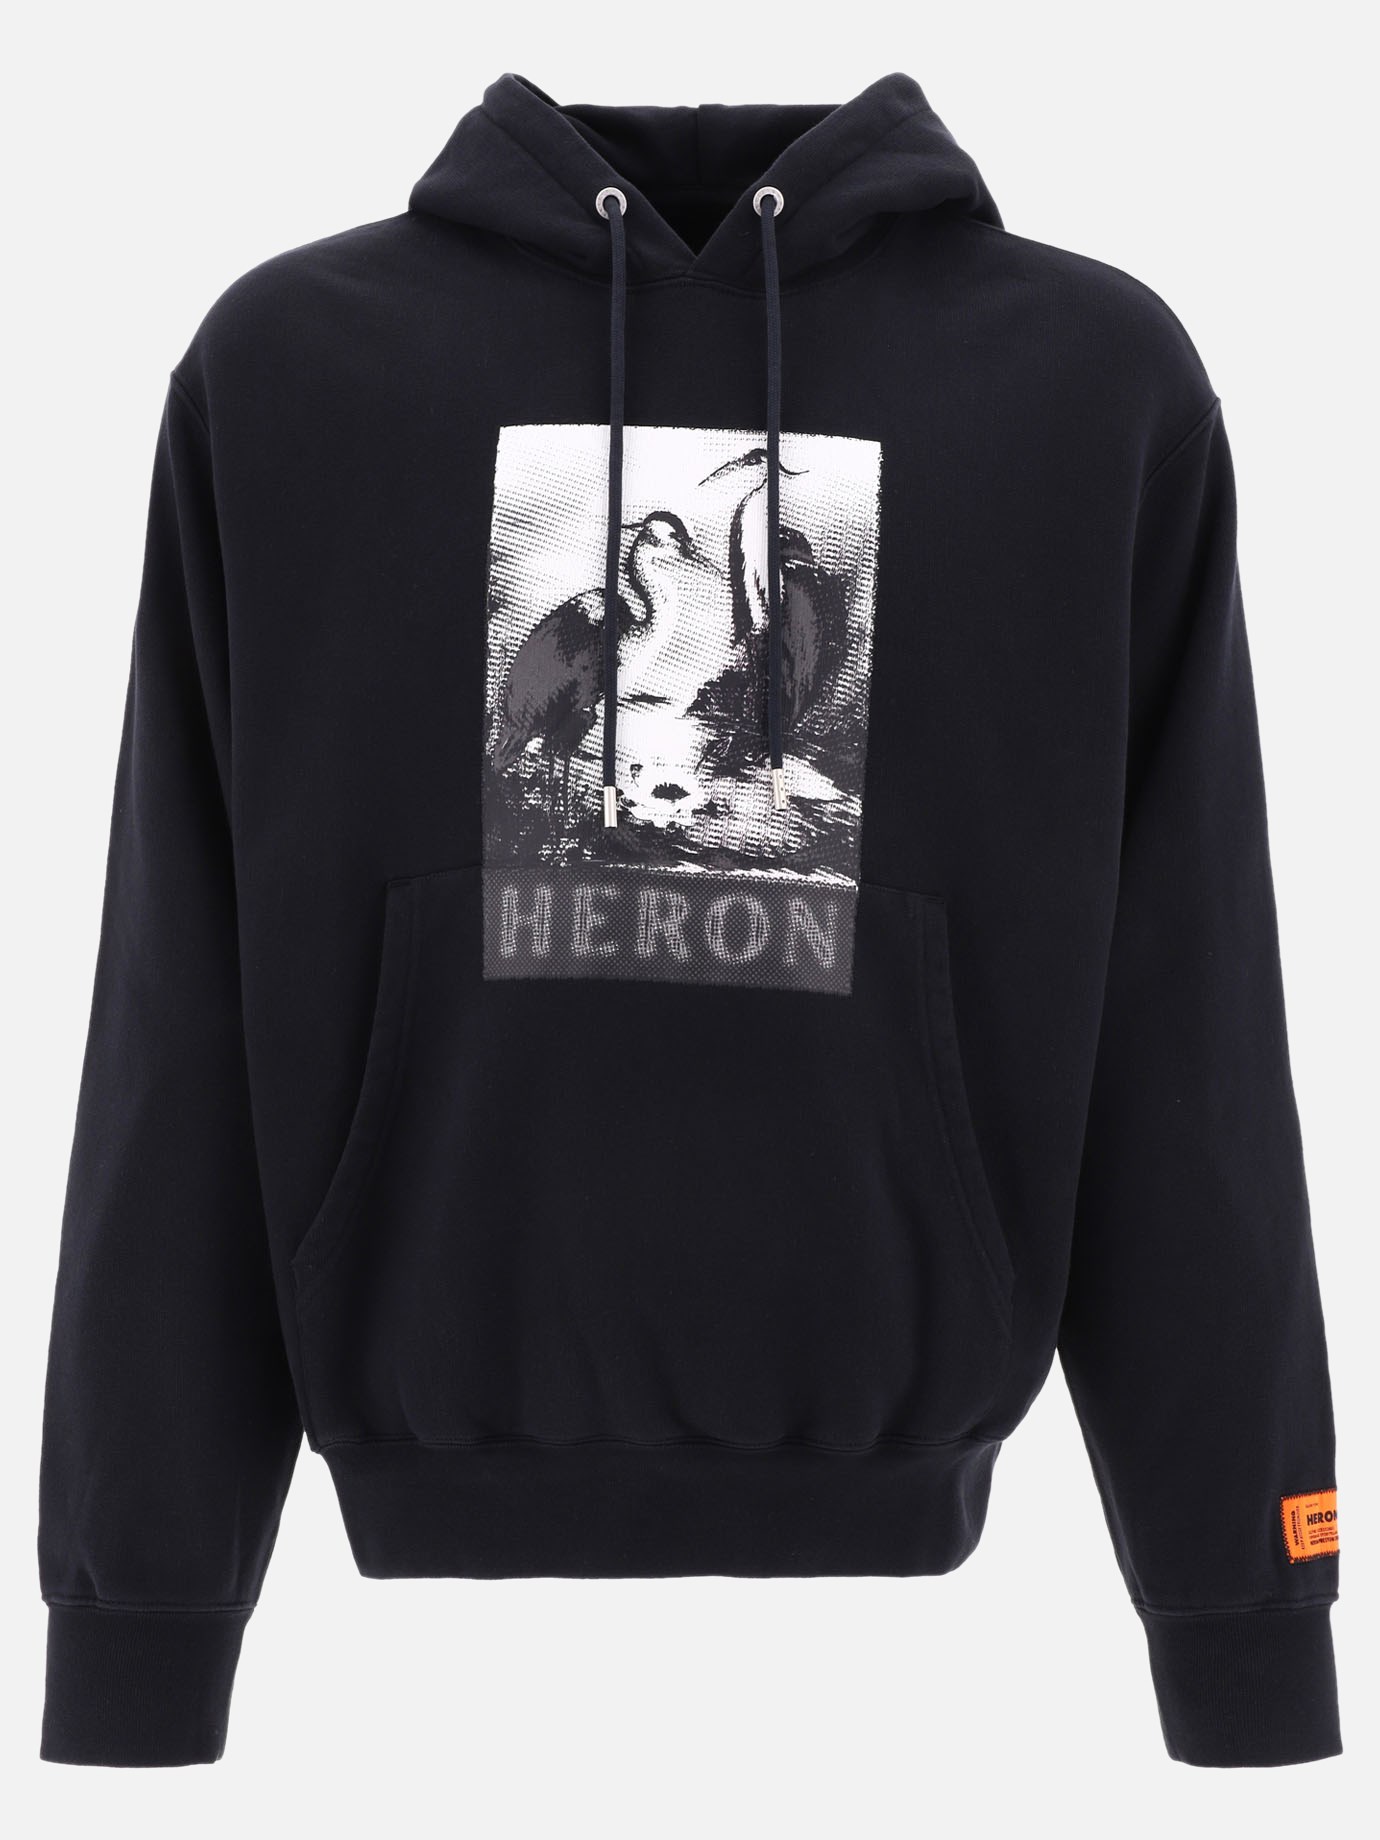  Halftone Heron  hoodieby Heron Preston - 5